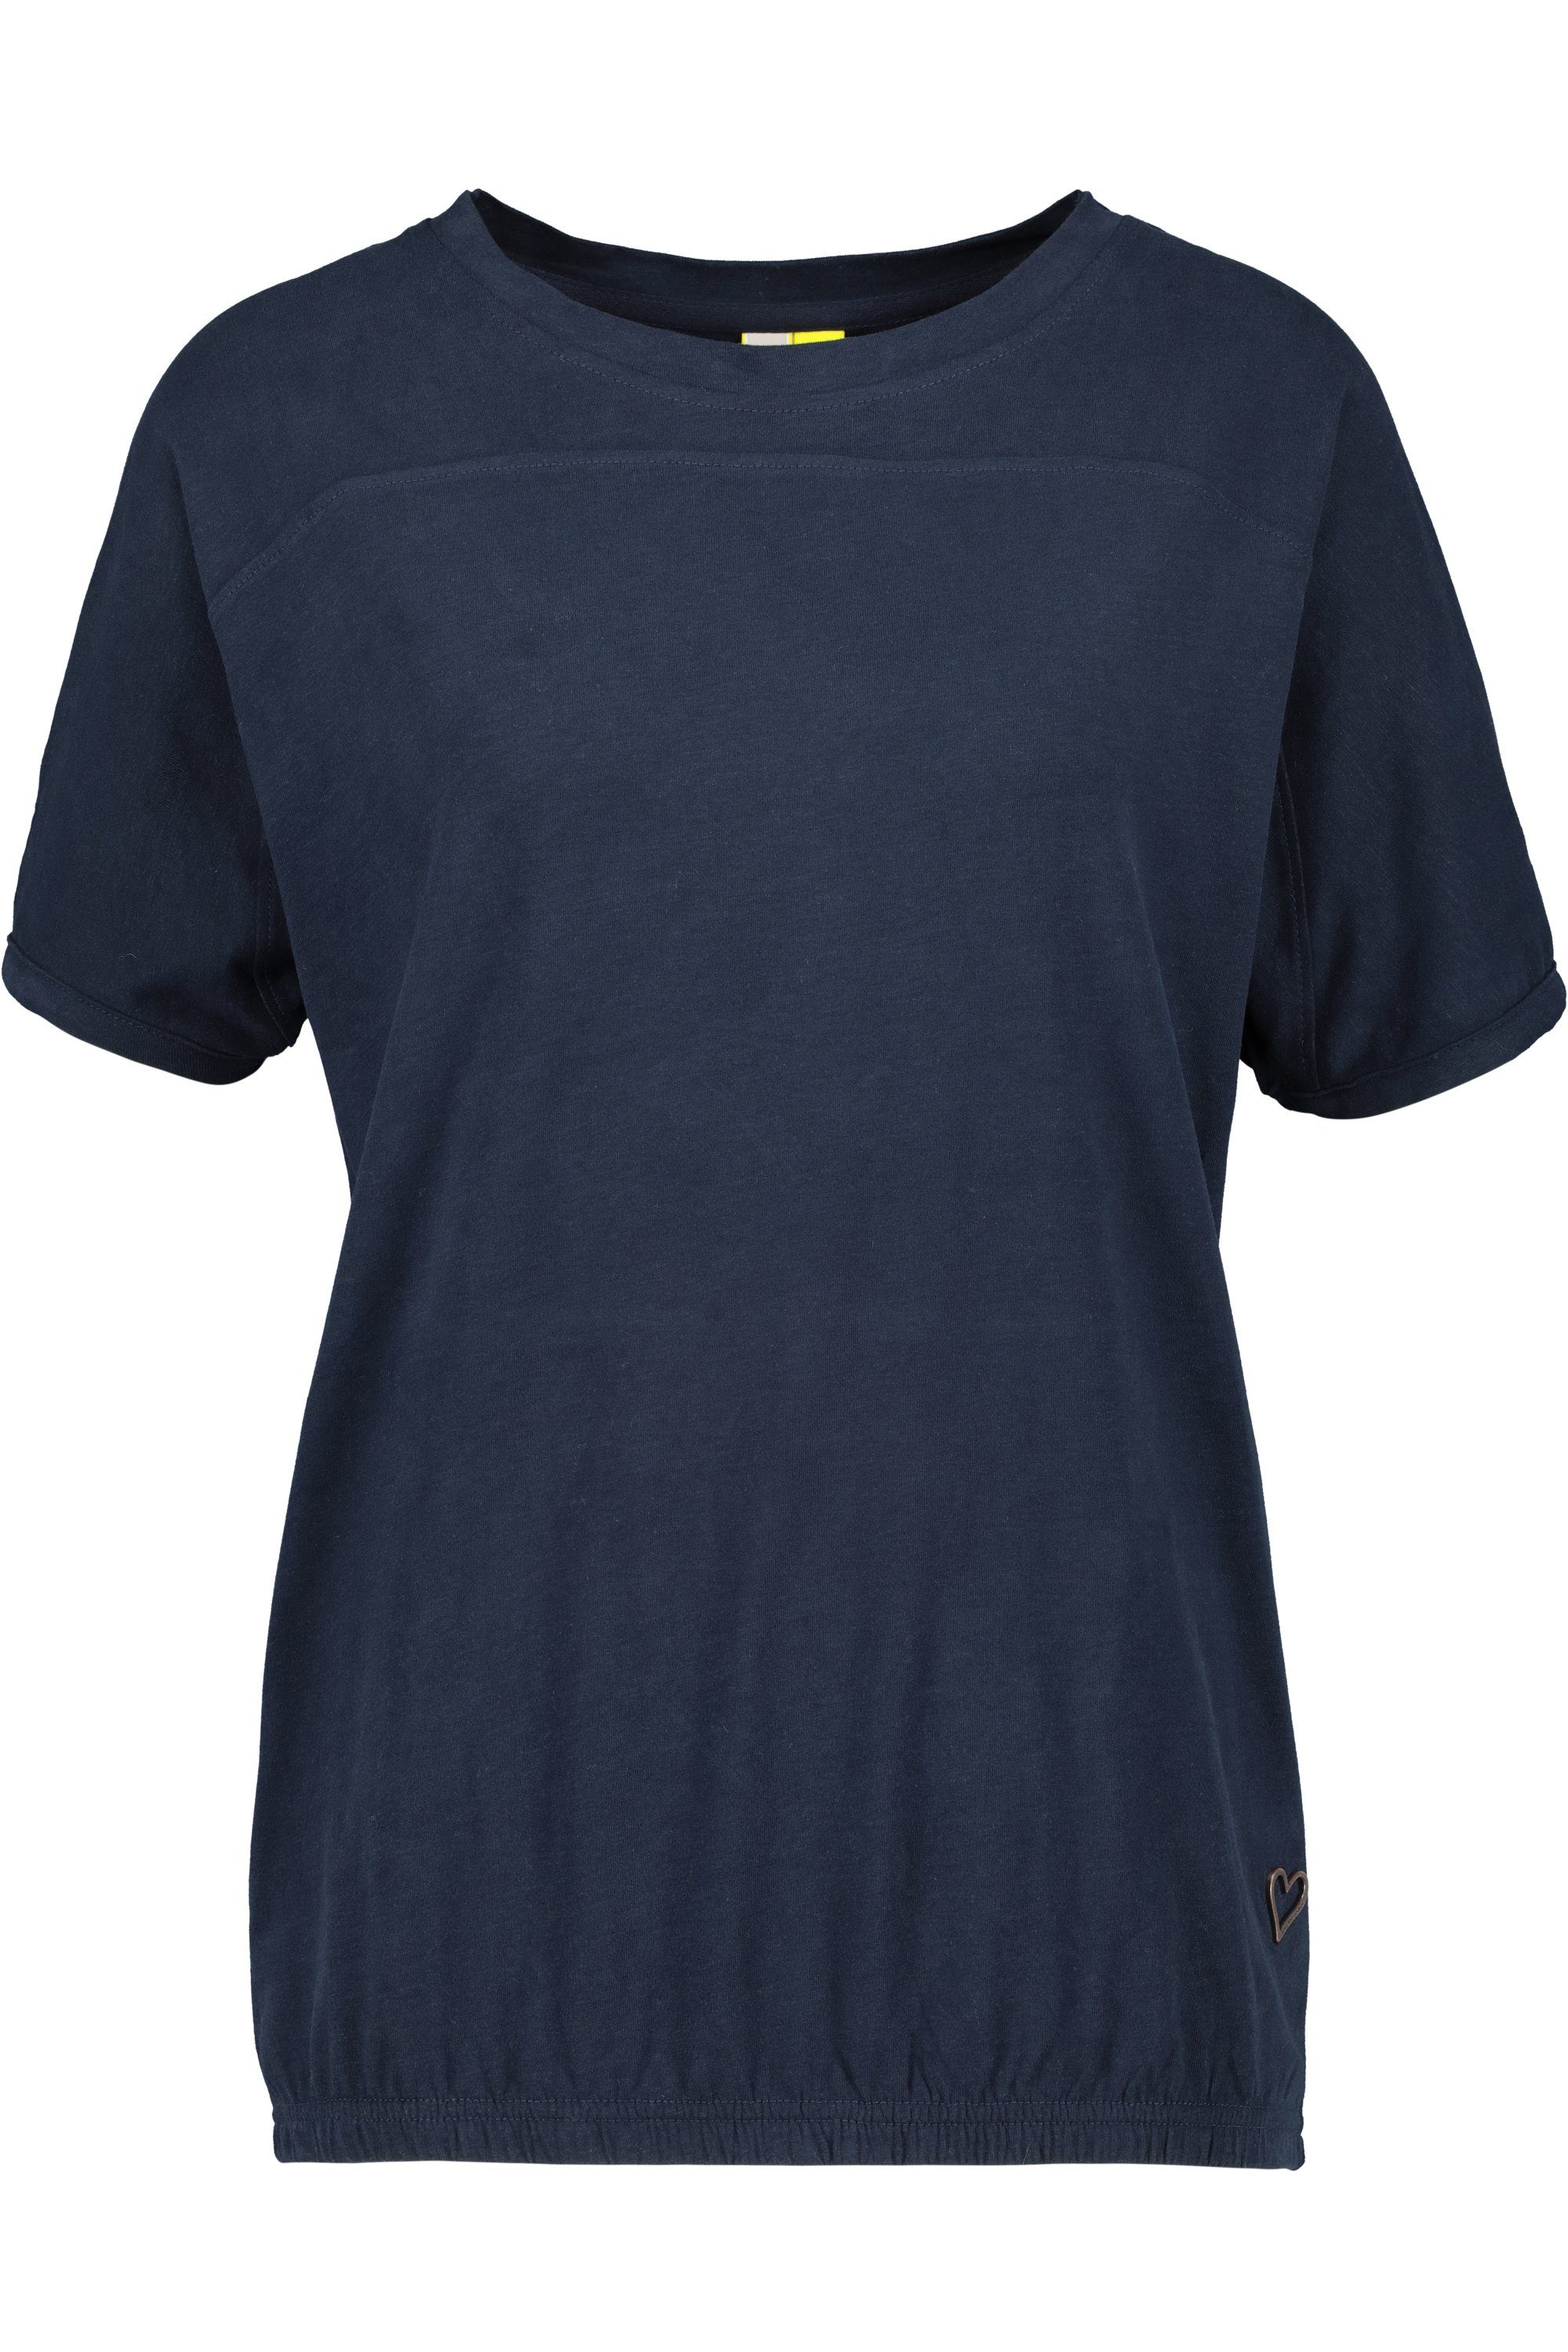 Alife & Kickin T-Shirt Damen marine DiniAK T-Shirt